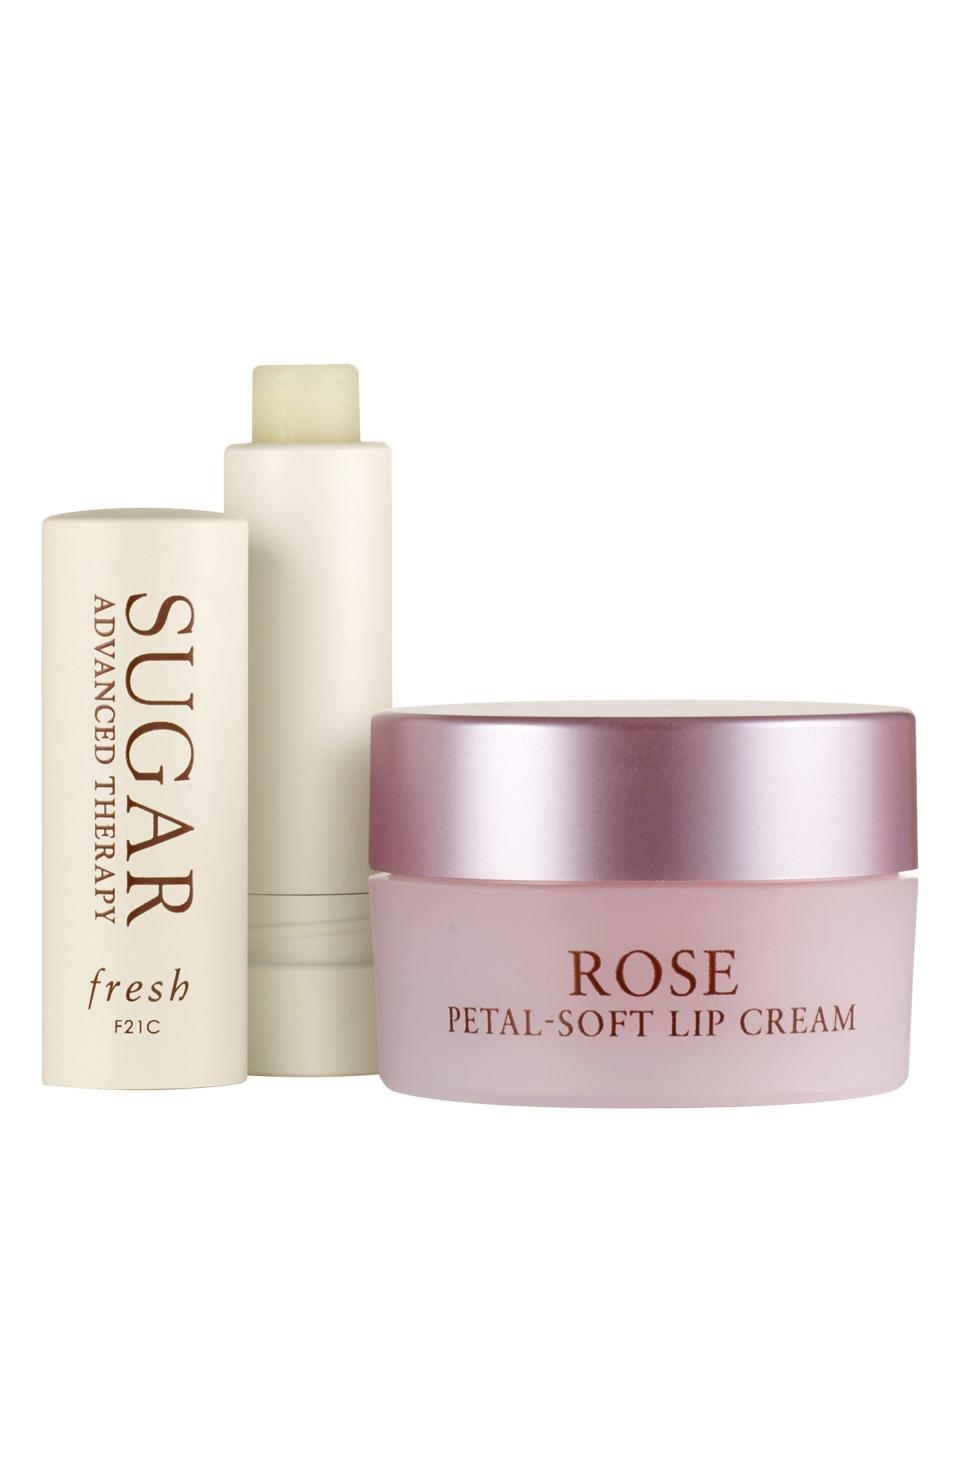 18) Rose Petal-Soft Lip Cream Set ($37 Value)